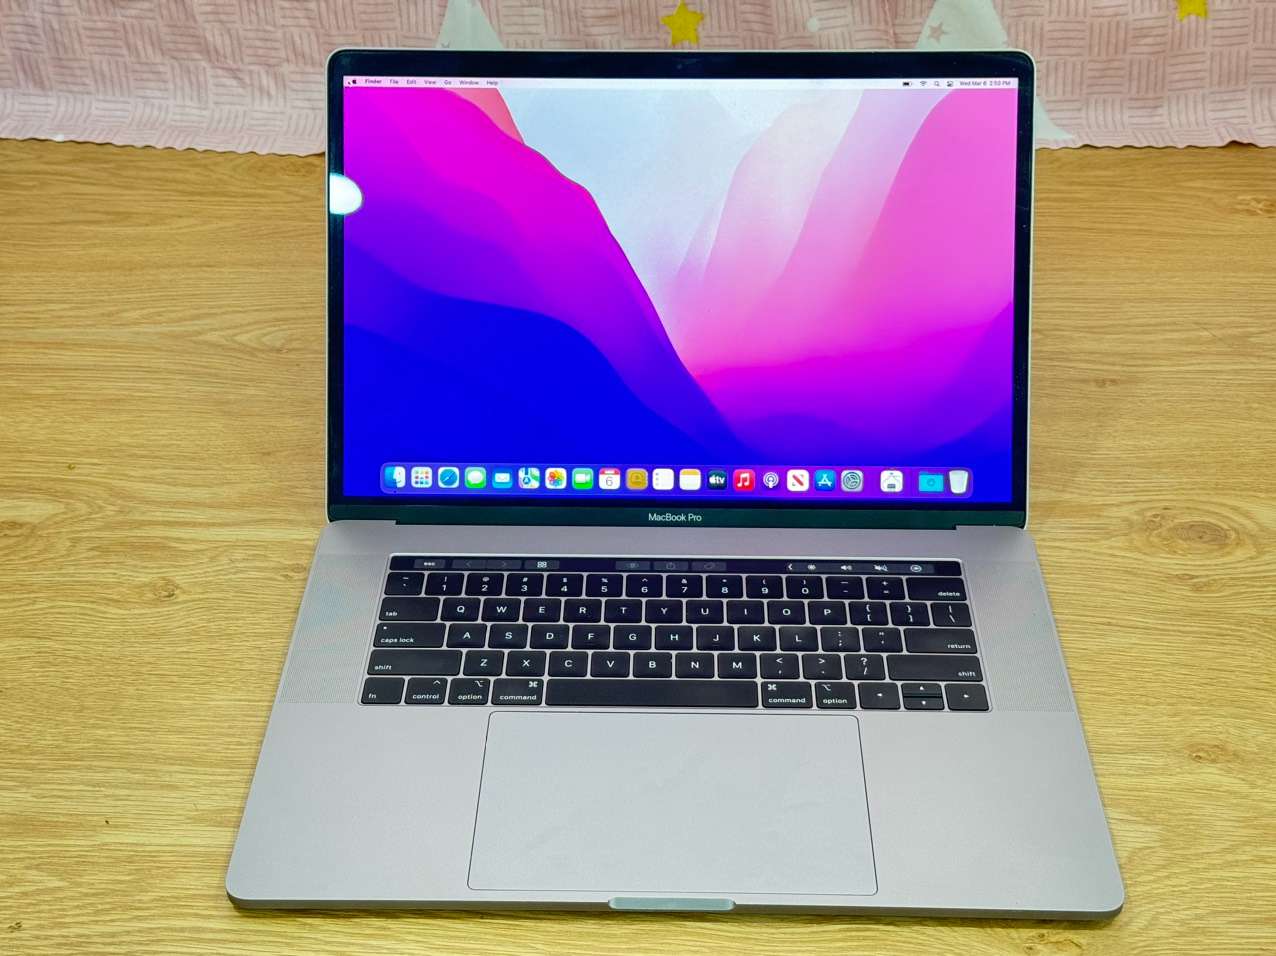 Macbook-pro-15-inch-2018-core-i7-ram-16gb-ssd-500gb-vga-like-new-9